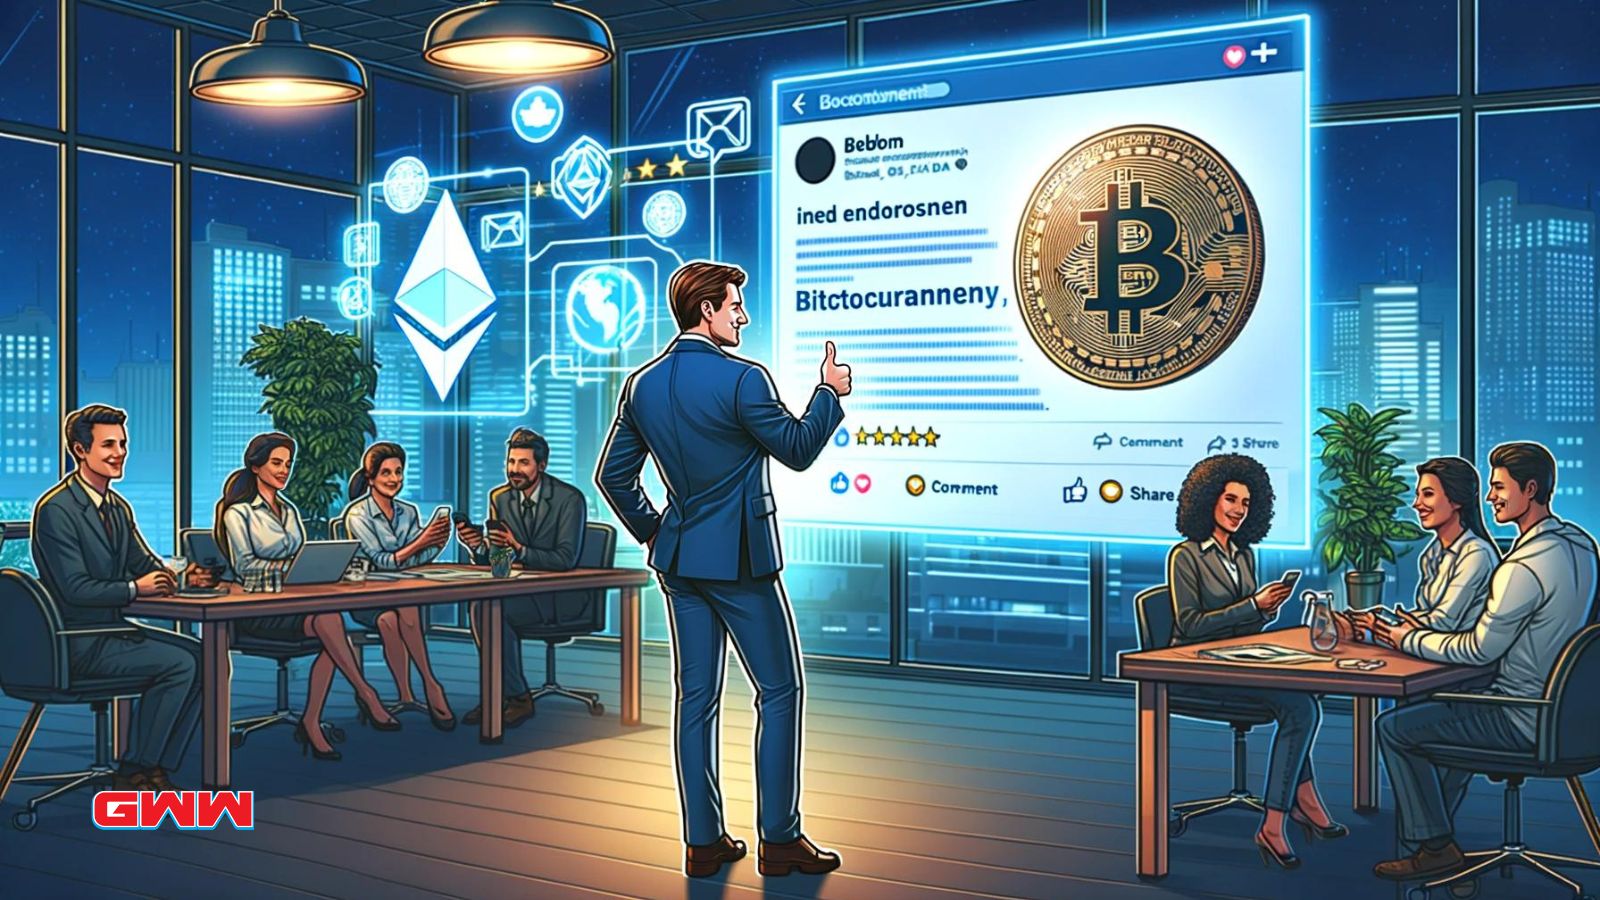 A scene depicting a high-profile figure endorsing cryptocurrency on a social media platform